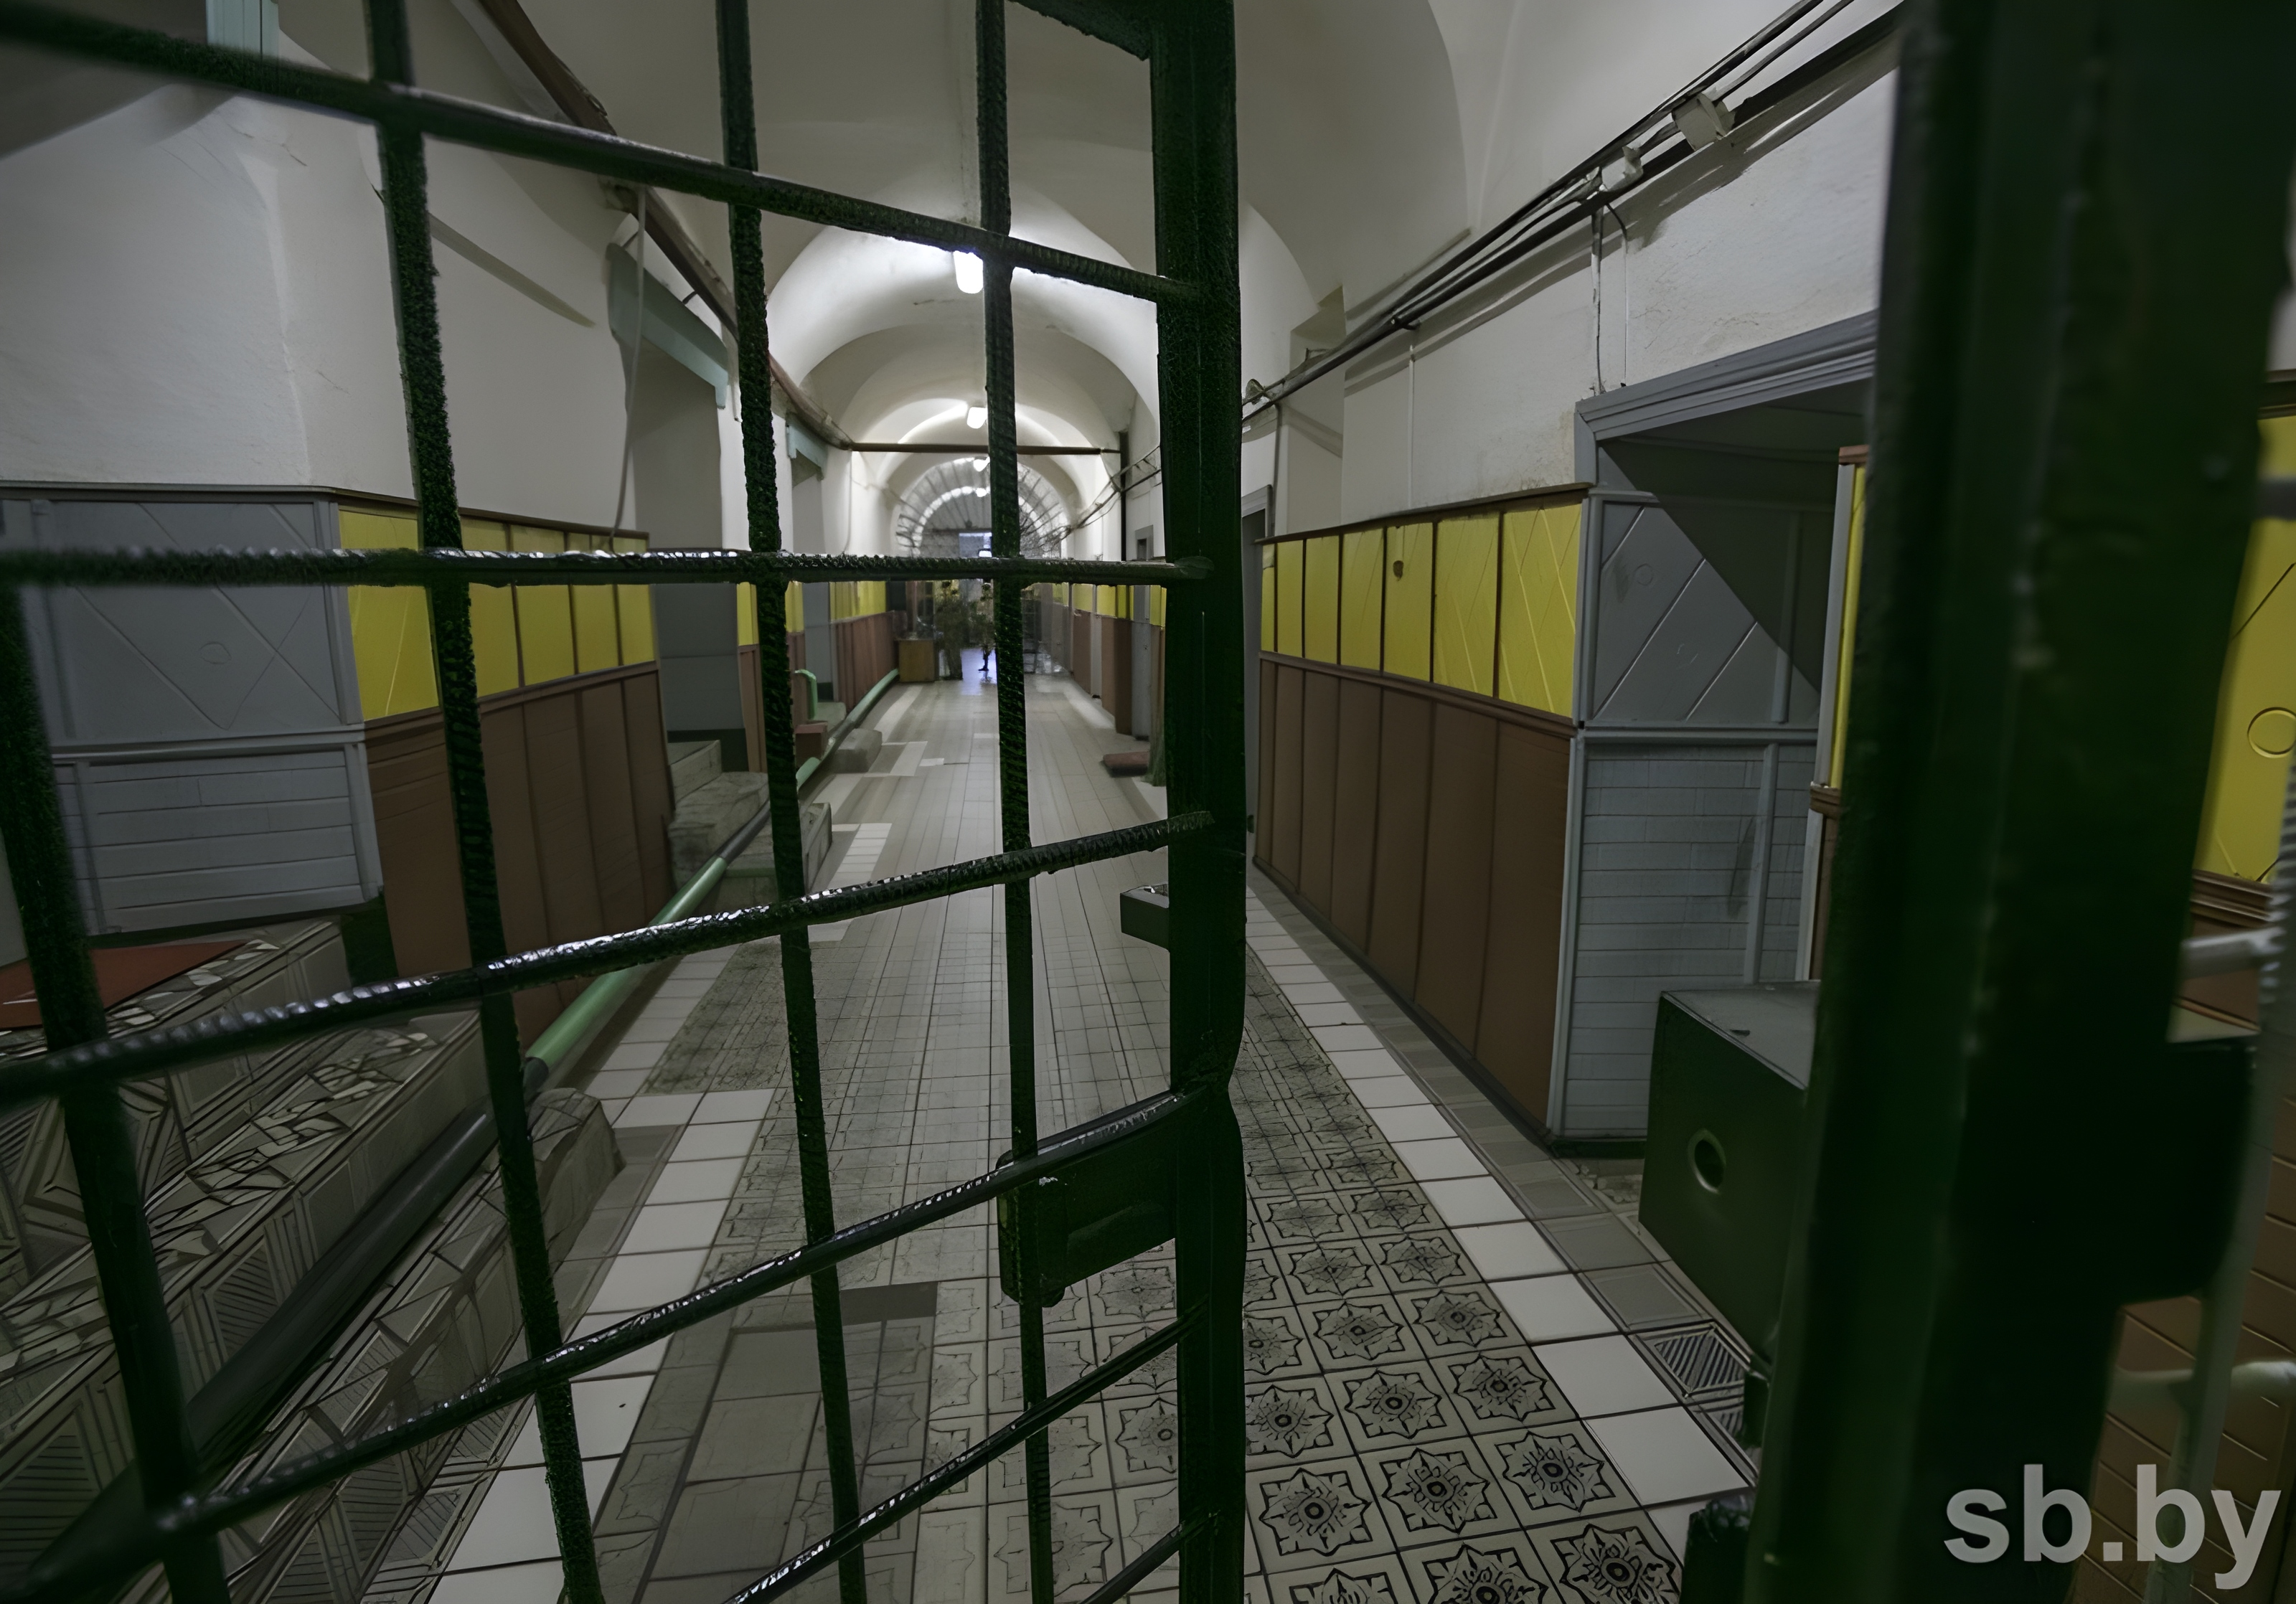 Интерьер тюремного корпуса в Глубоком. Фото sb.by